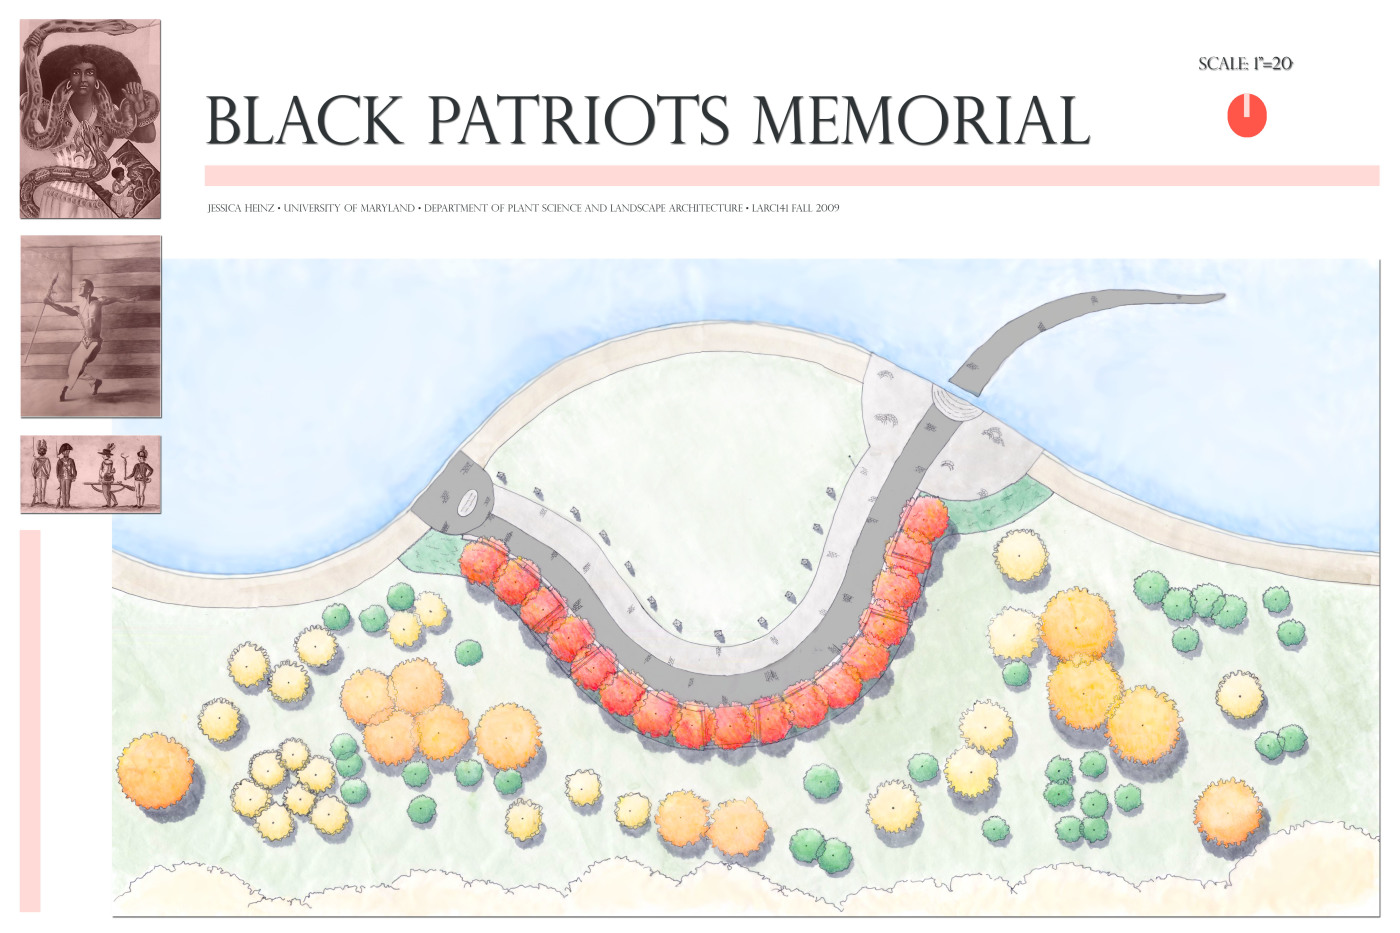 Black Patriots Memorial Design